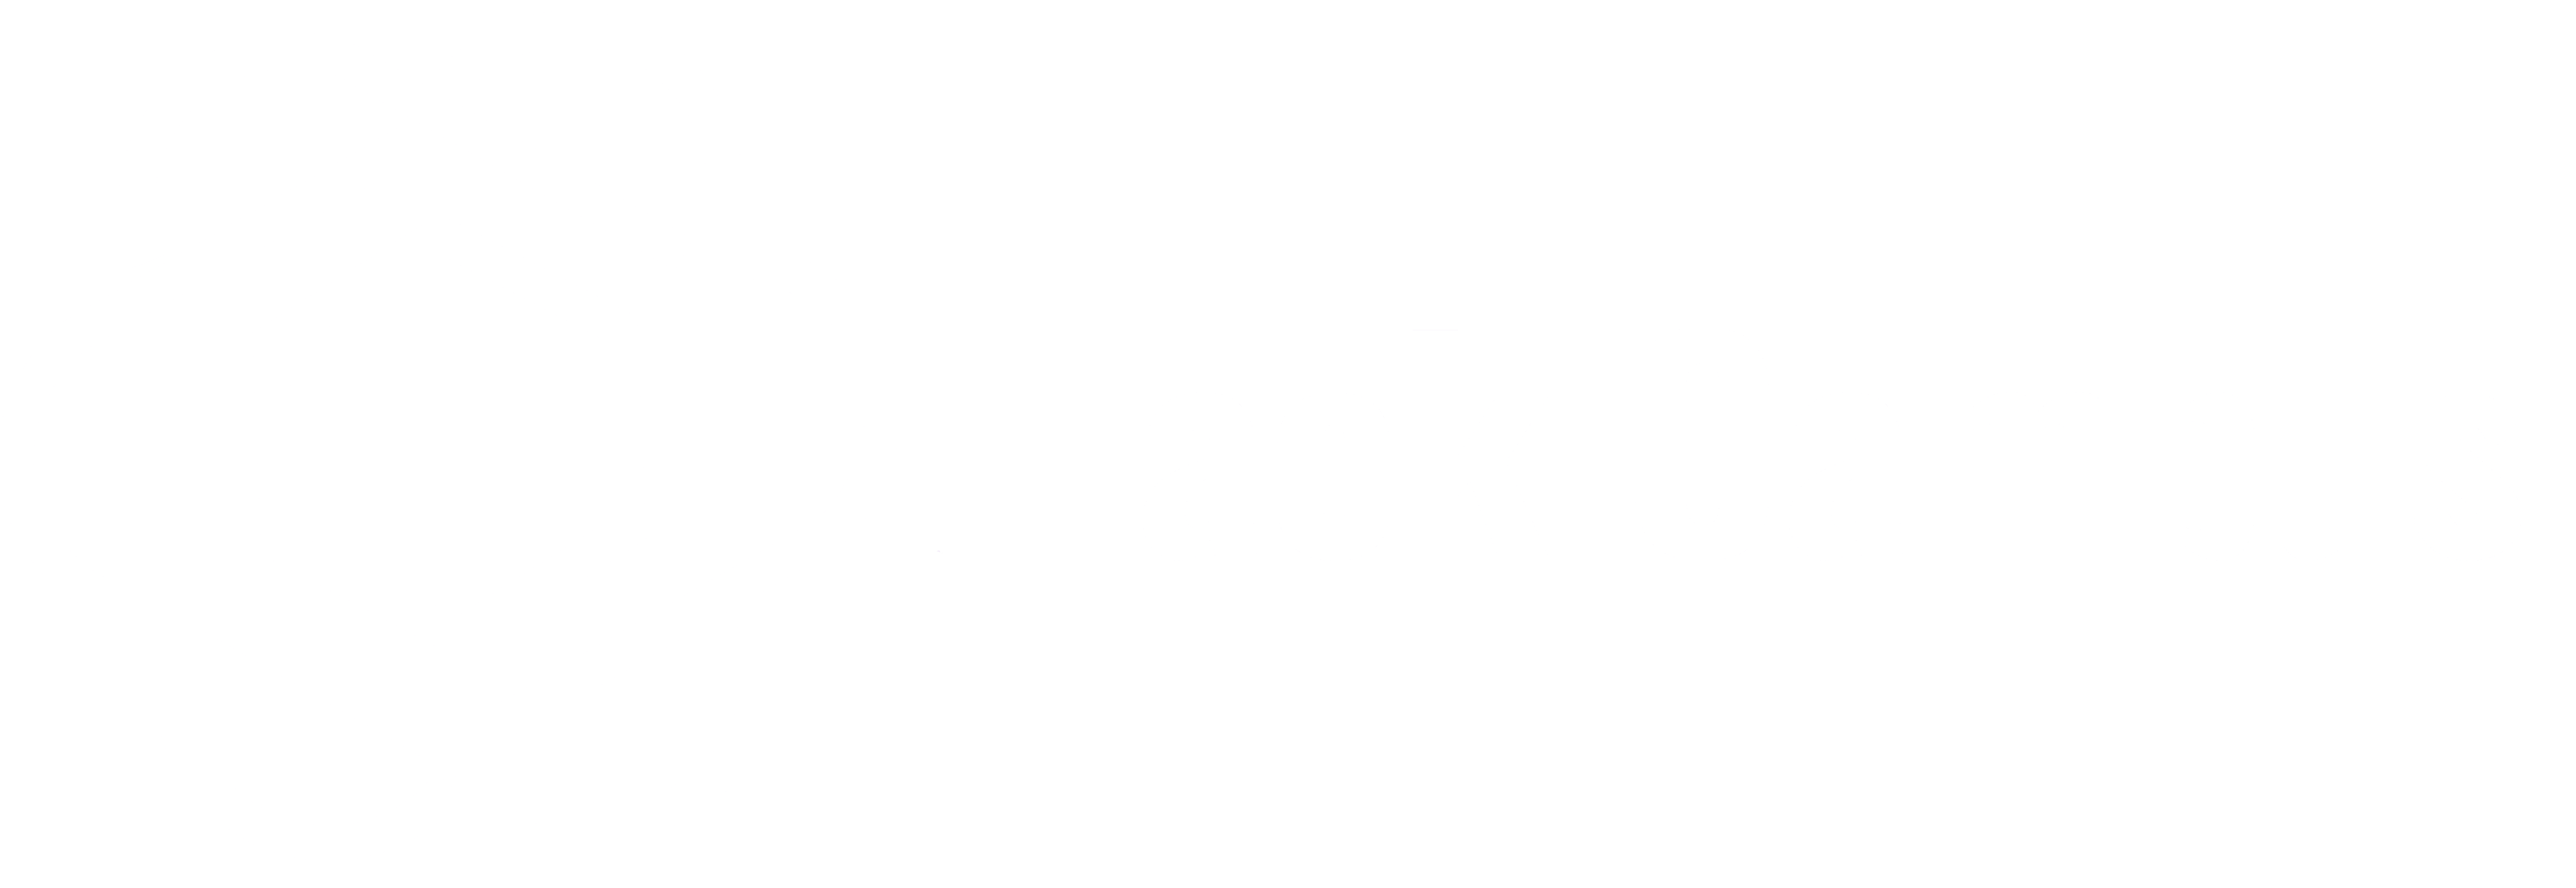 Hack Campus University